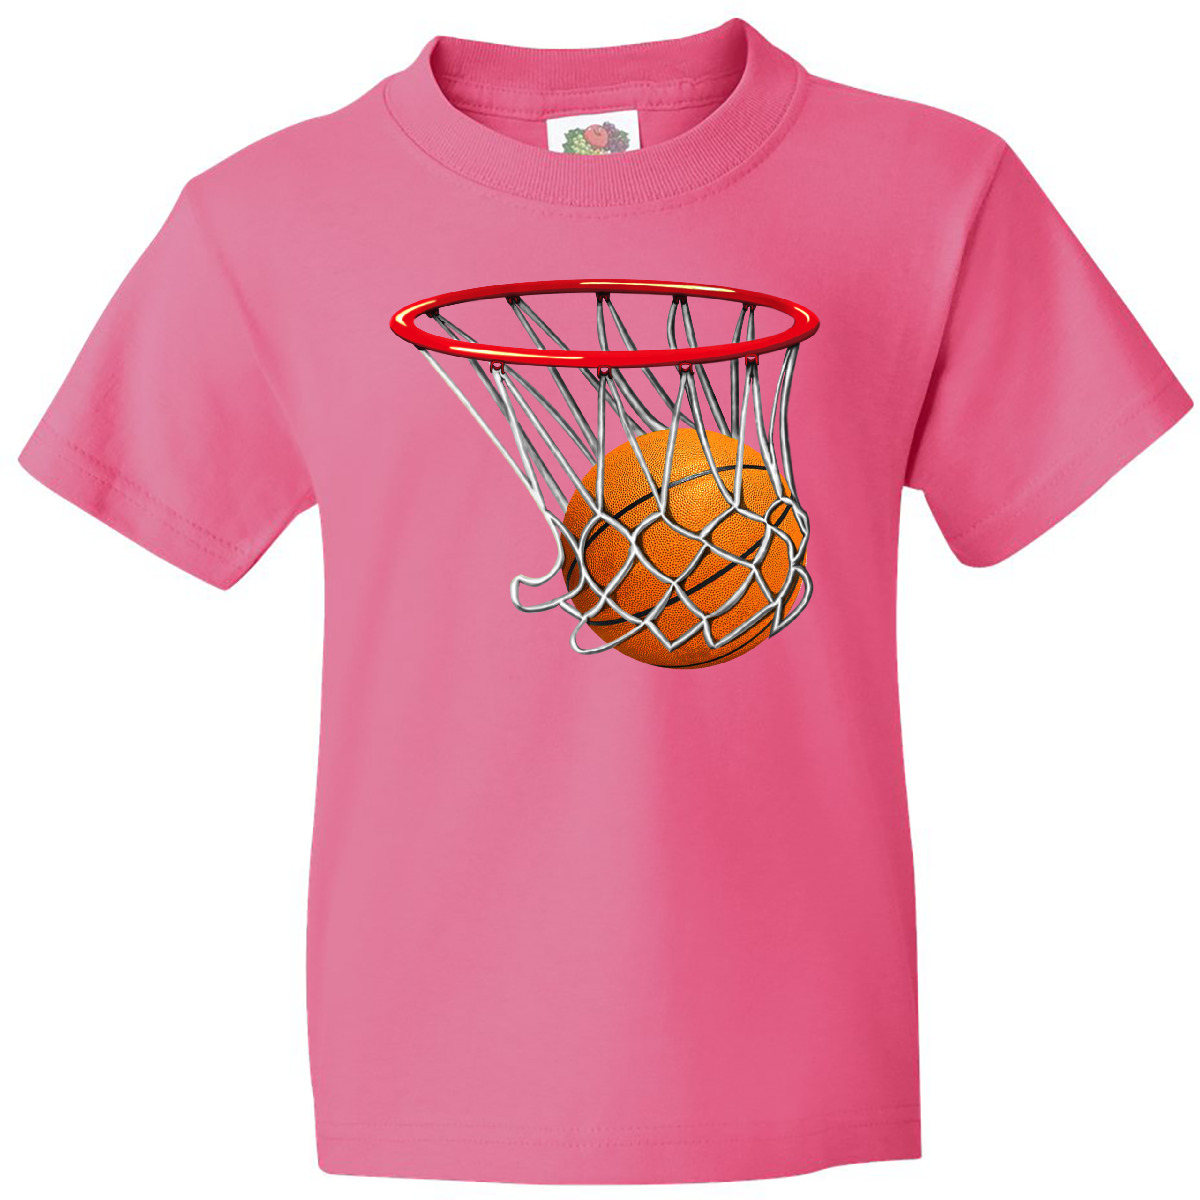 Inktastic Basketball Swish Youth T-Shirt Hoop Shoot Hoops Bball Sports  Baller | eBay